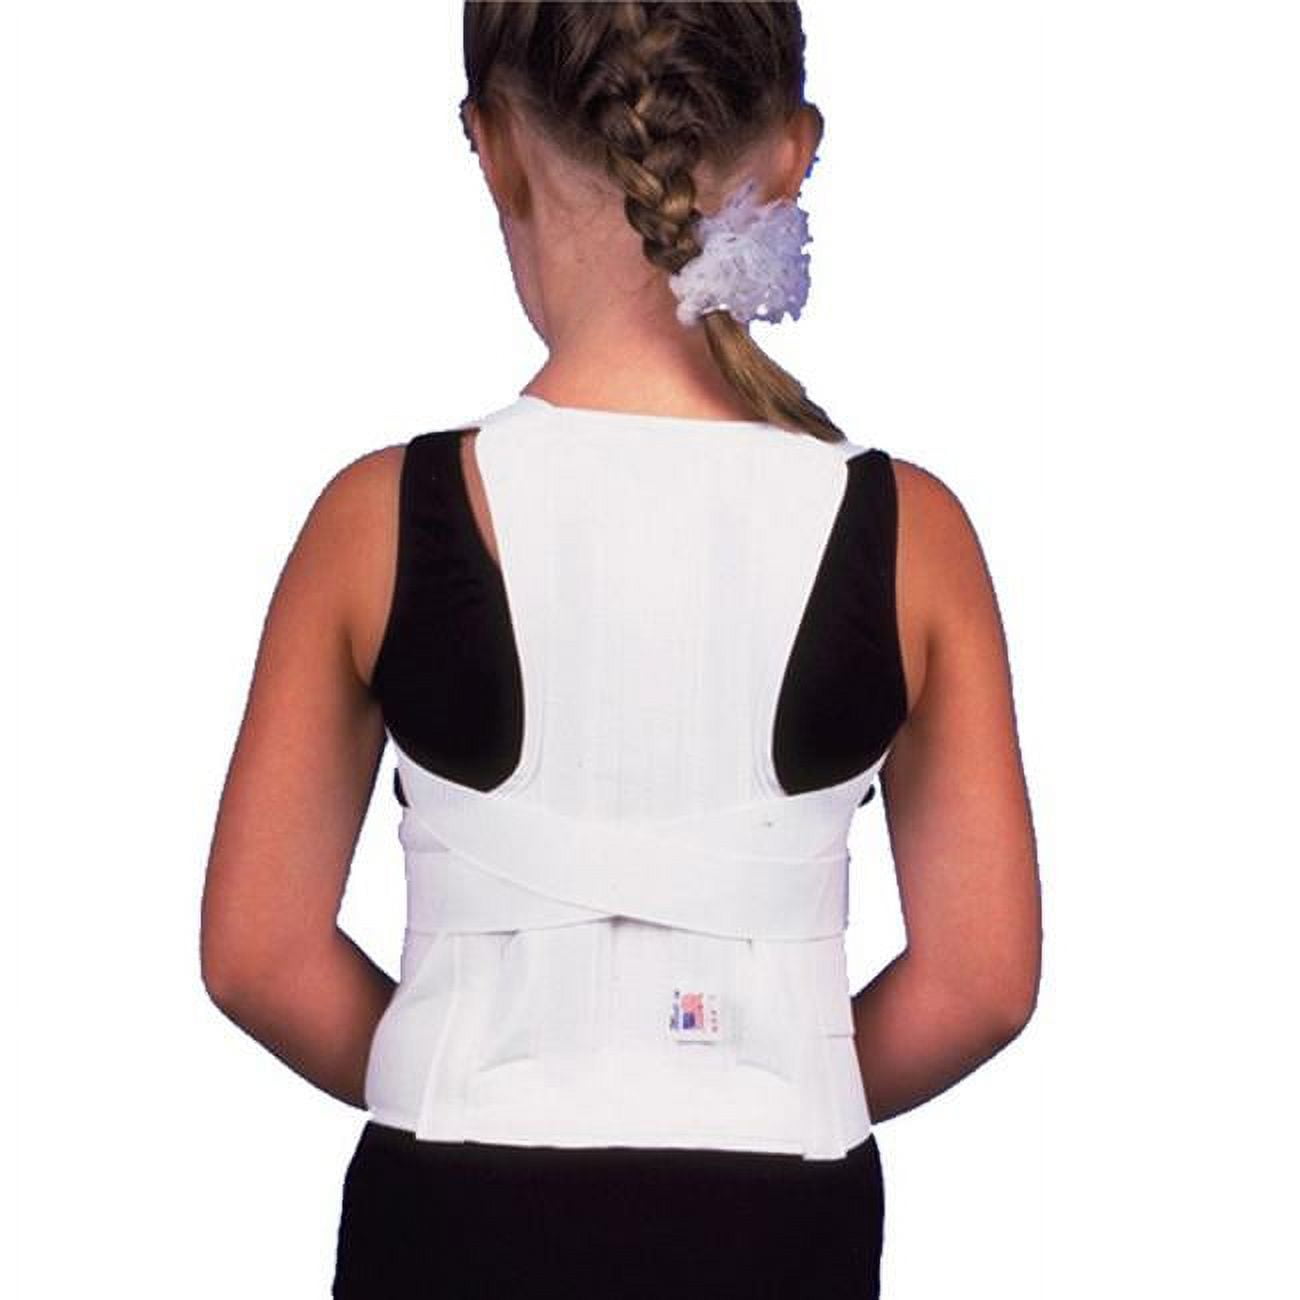 ITA-MED Complete Pediatric Posture Corrector, Back Support Brace